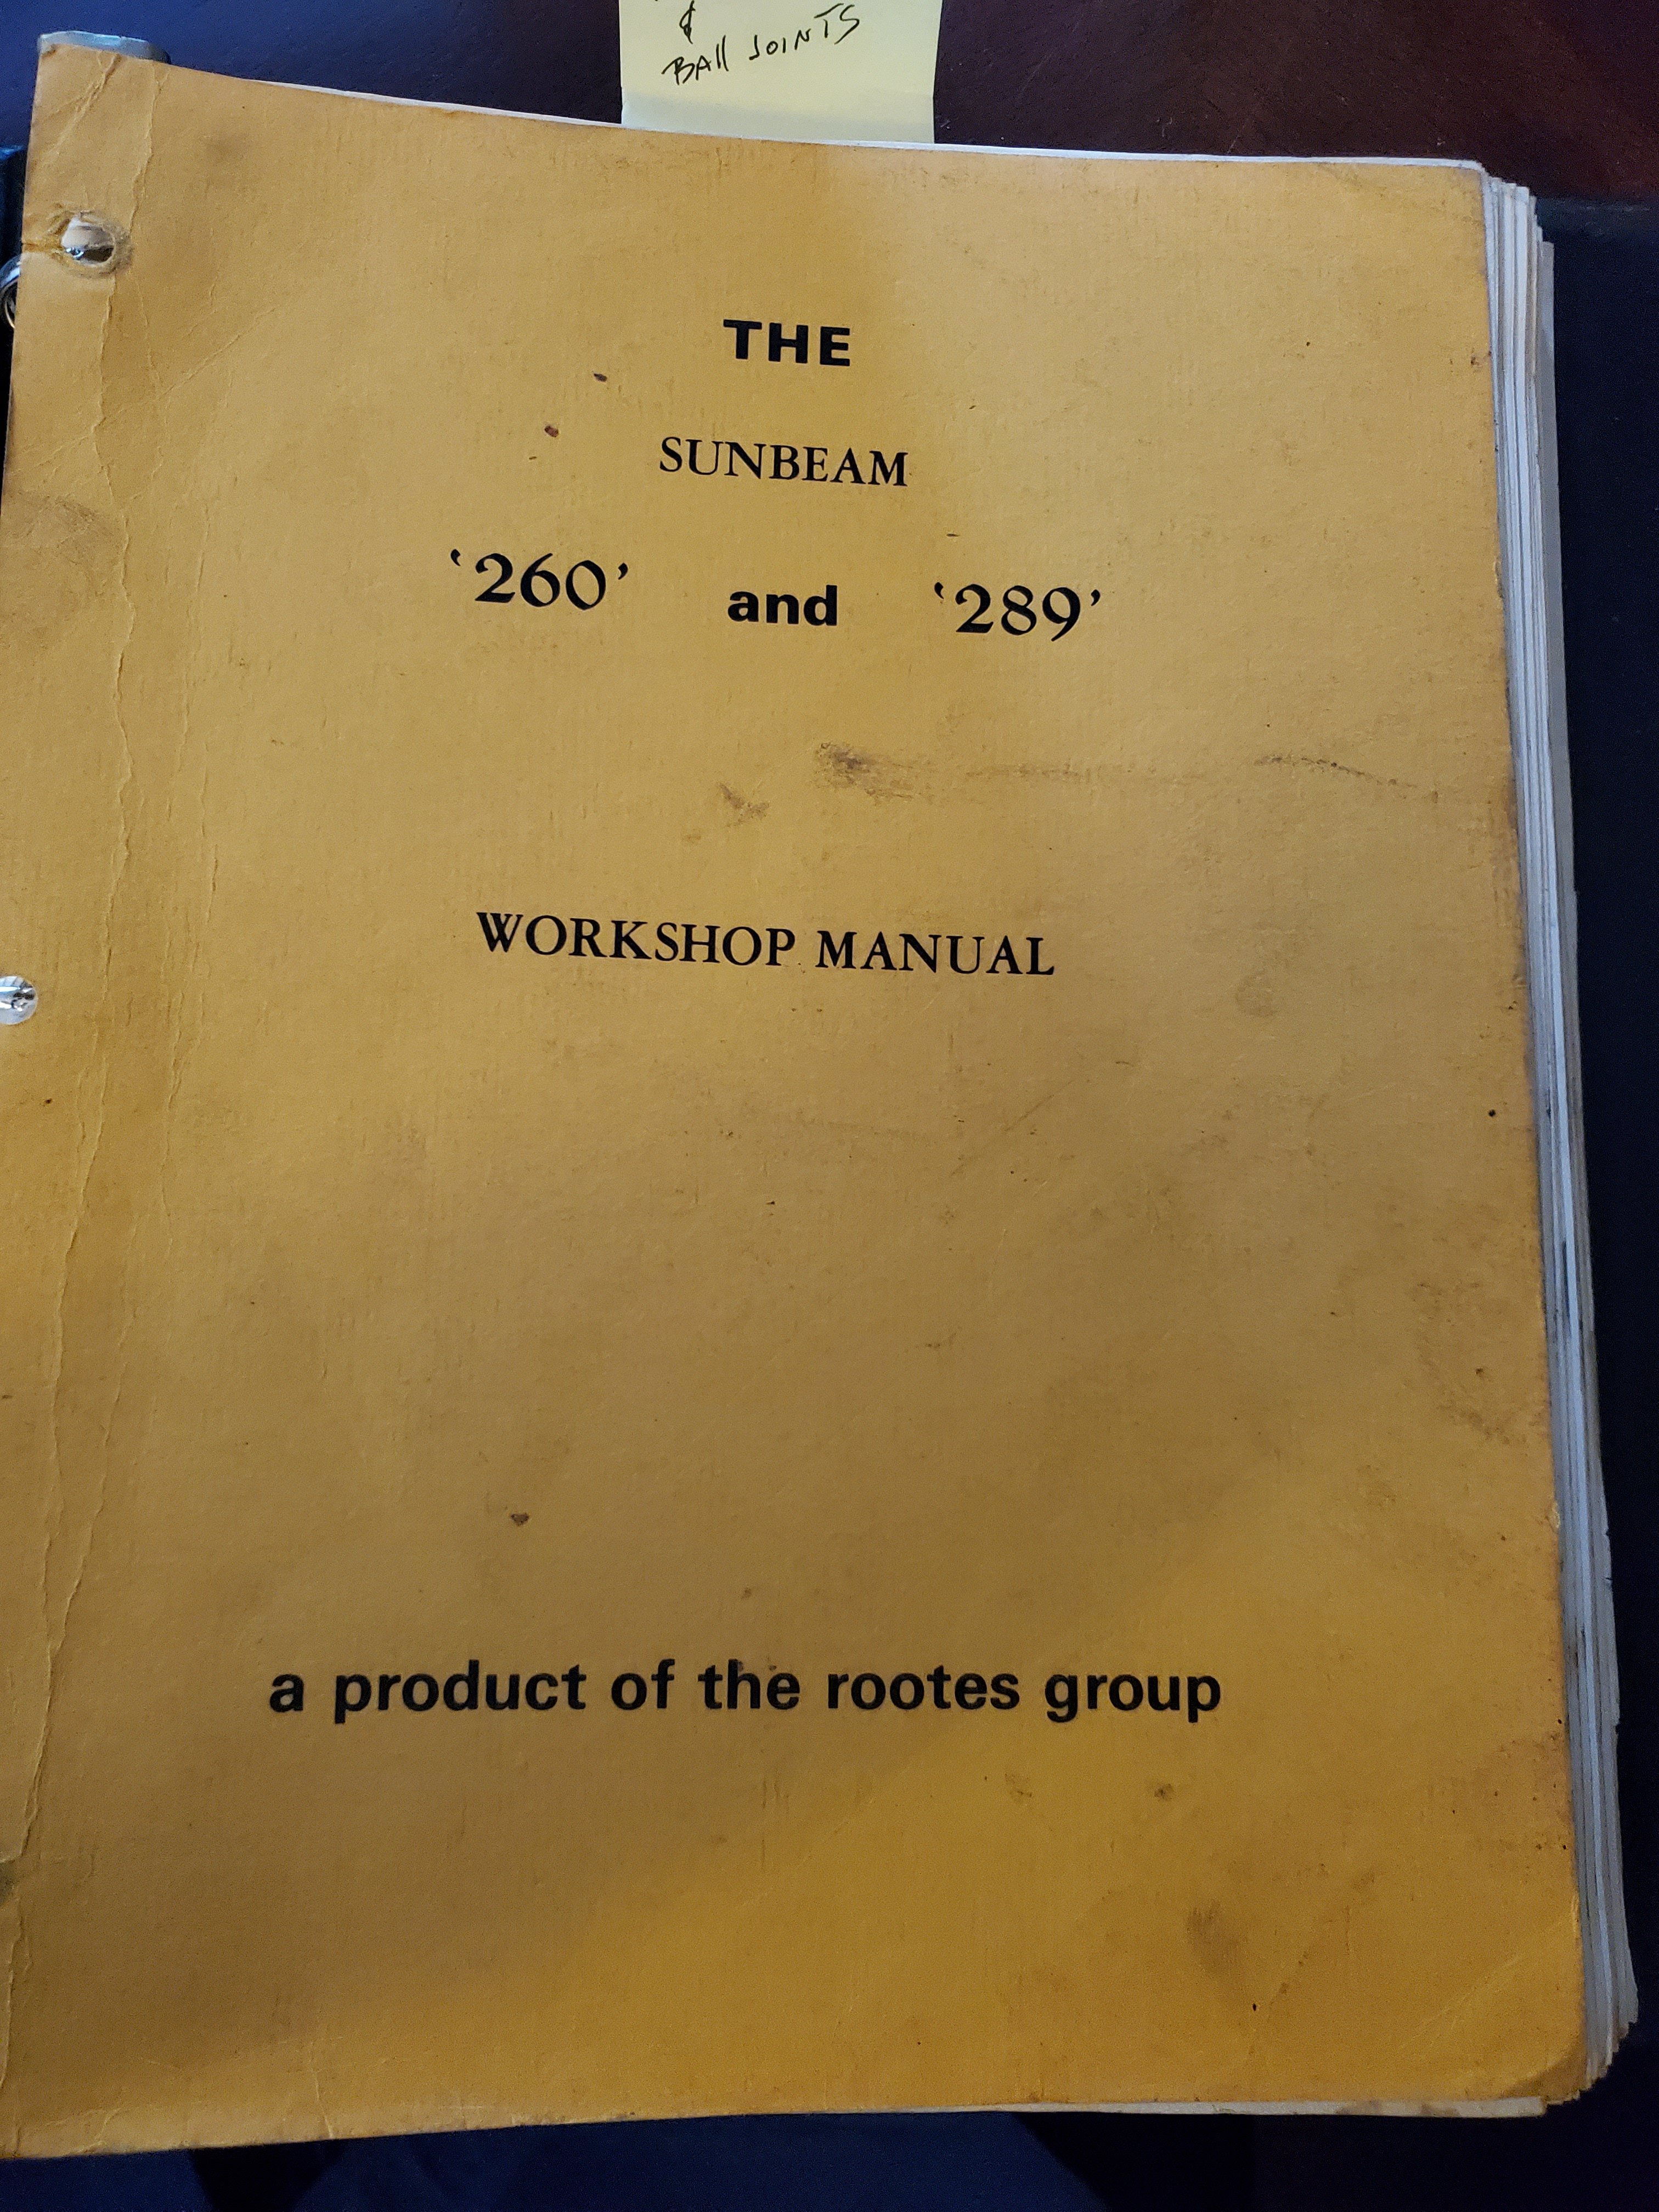 workshop manual cover.jpg